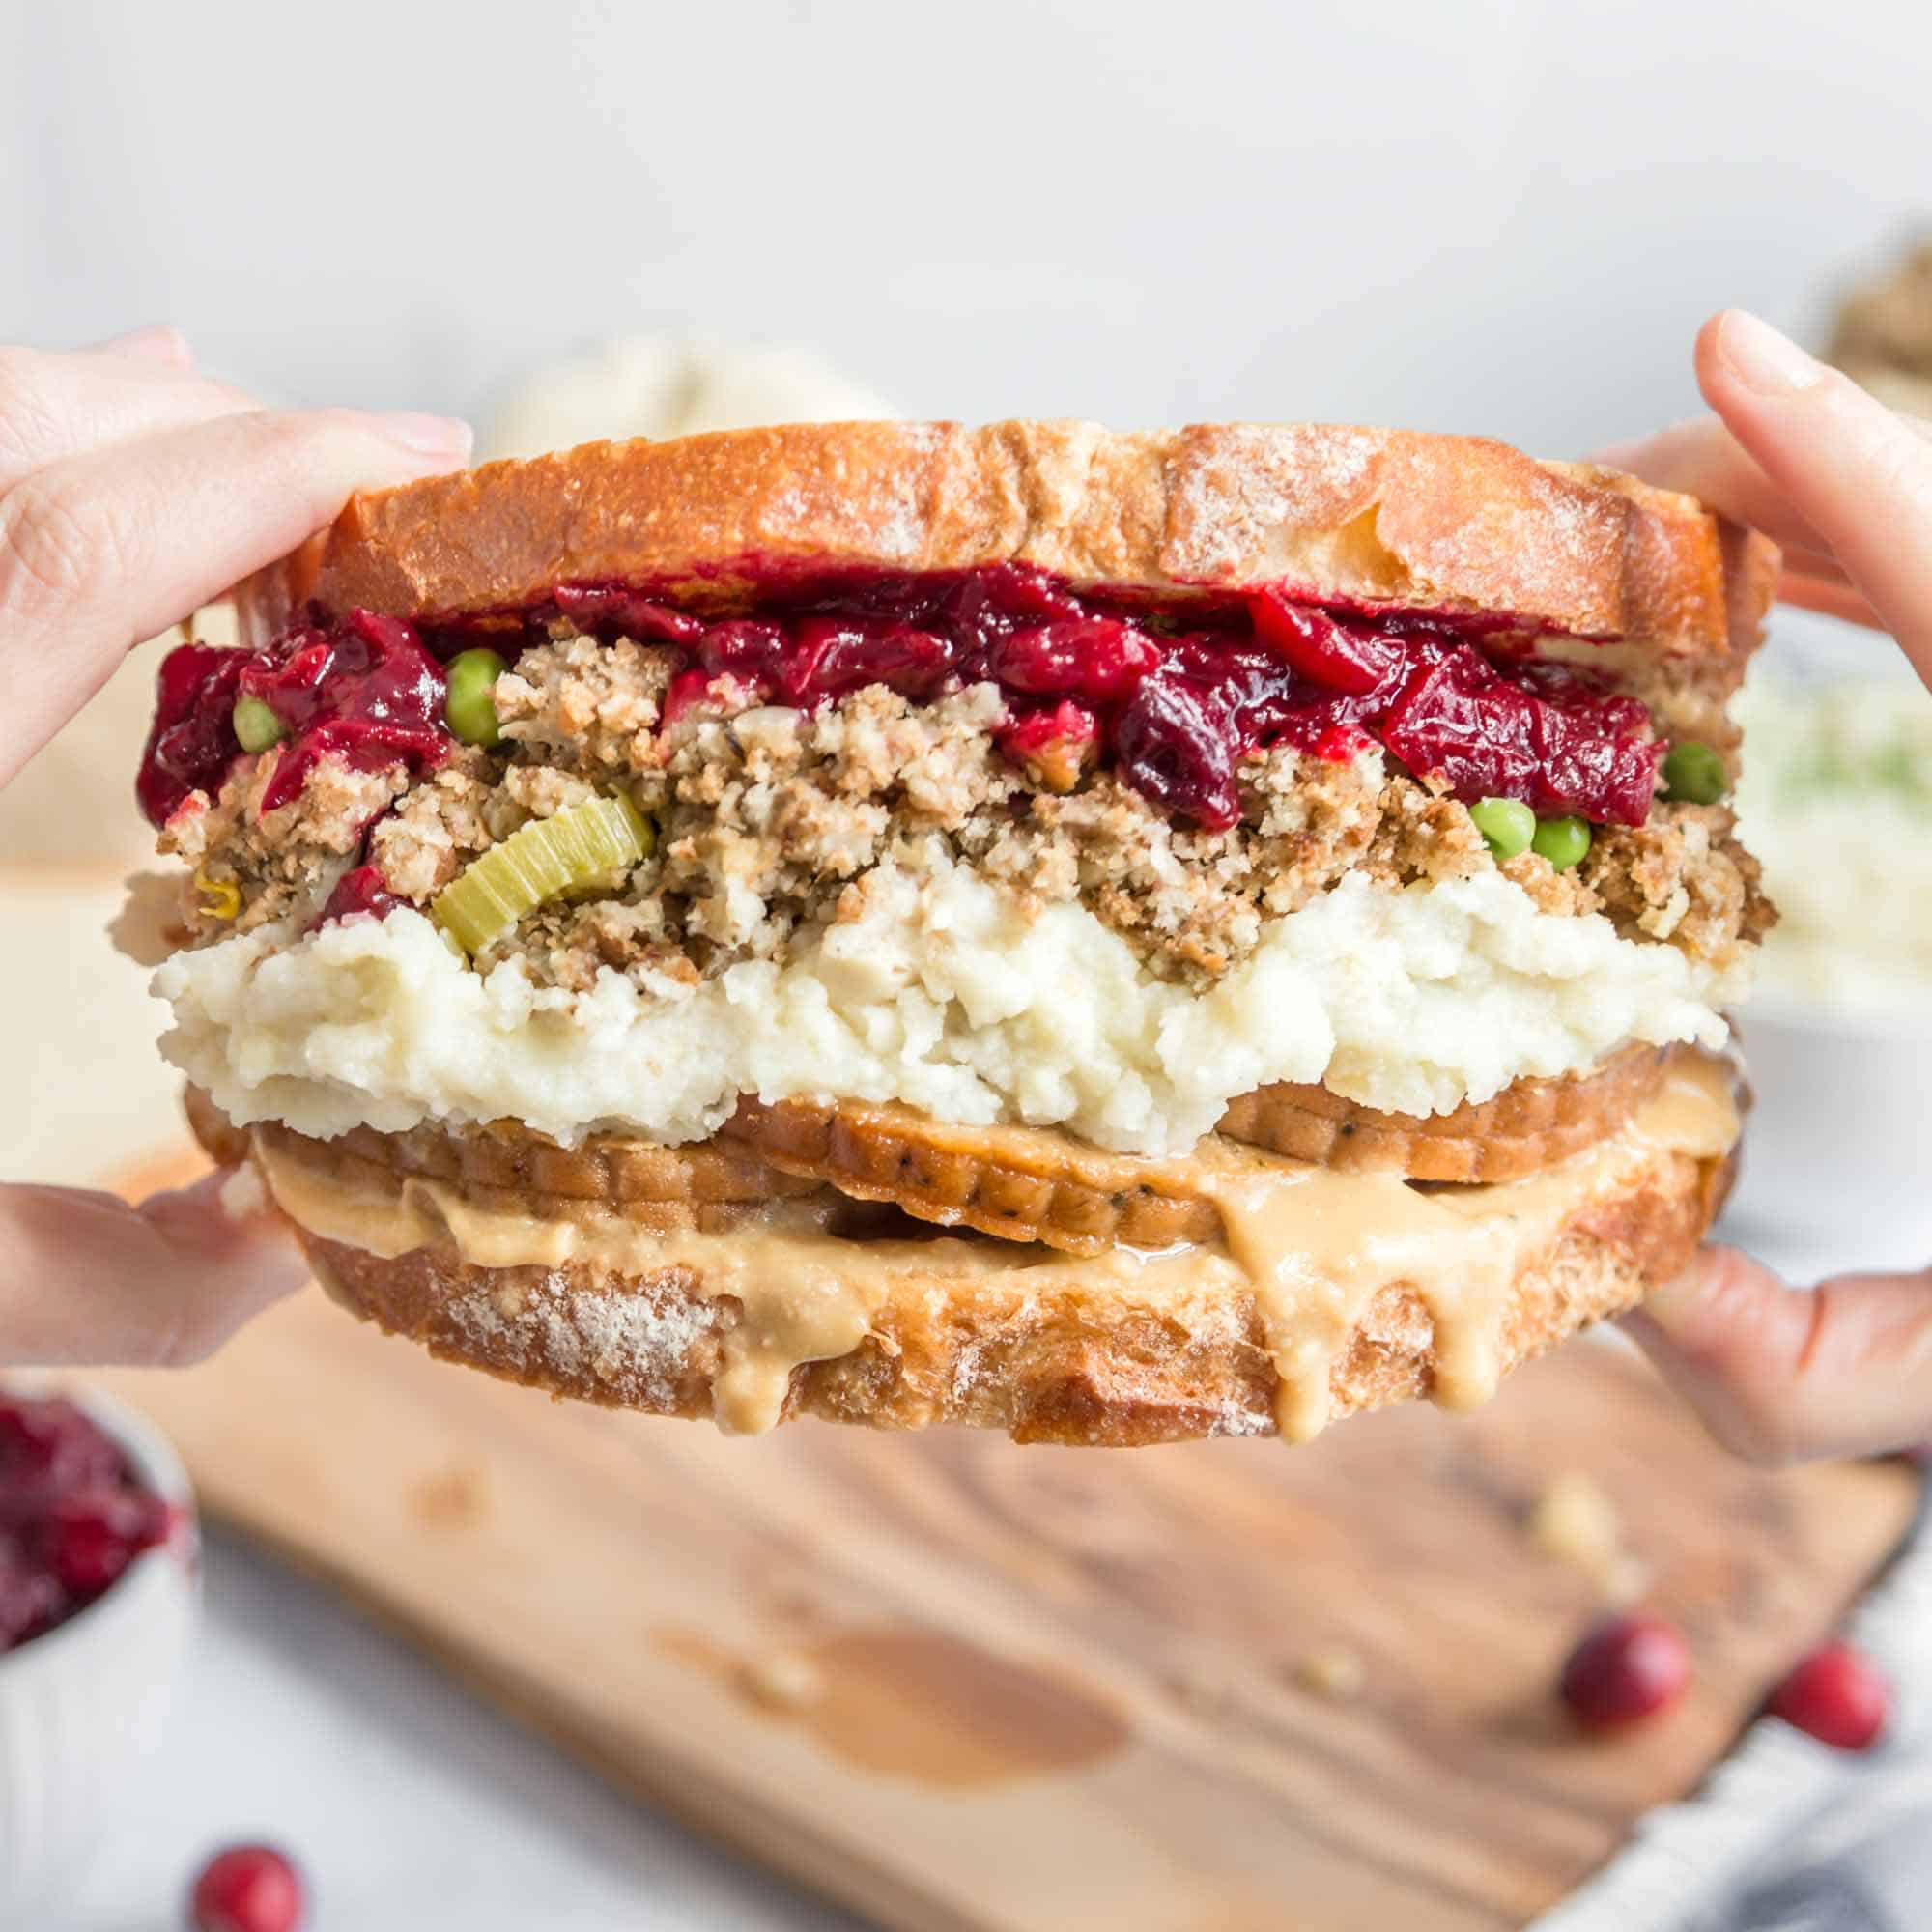 Hands holding an air-fried vegan Thanksgiving leftovers sandwich.